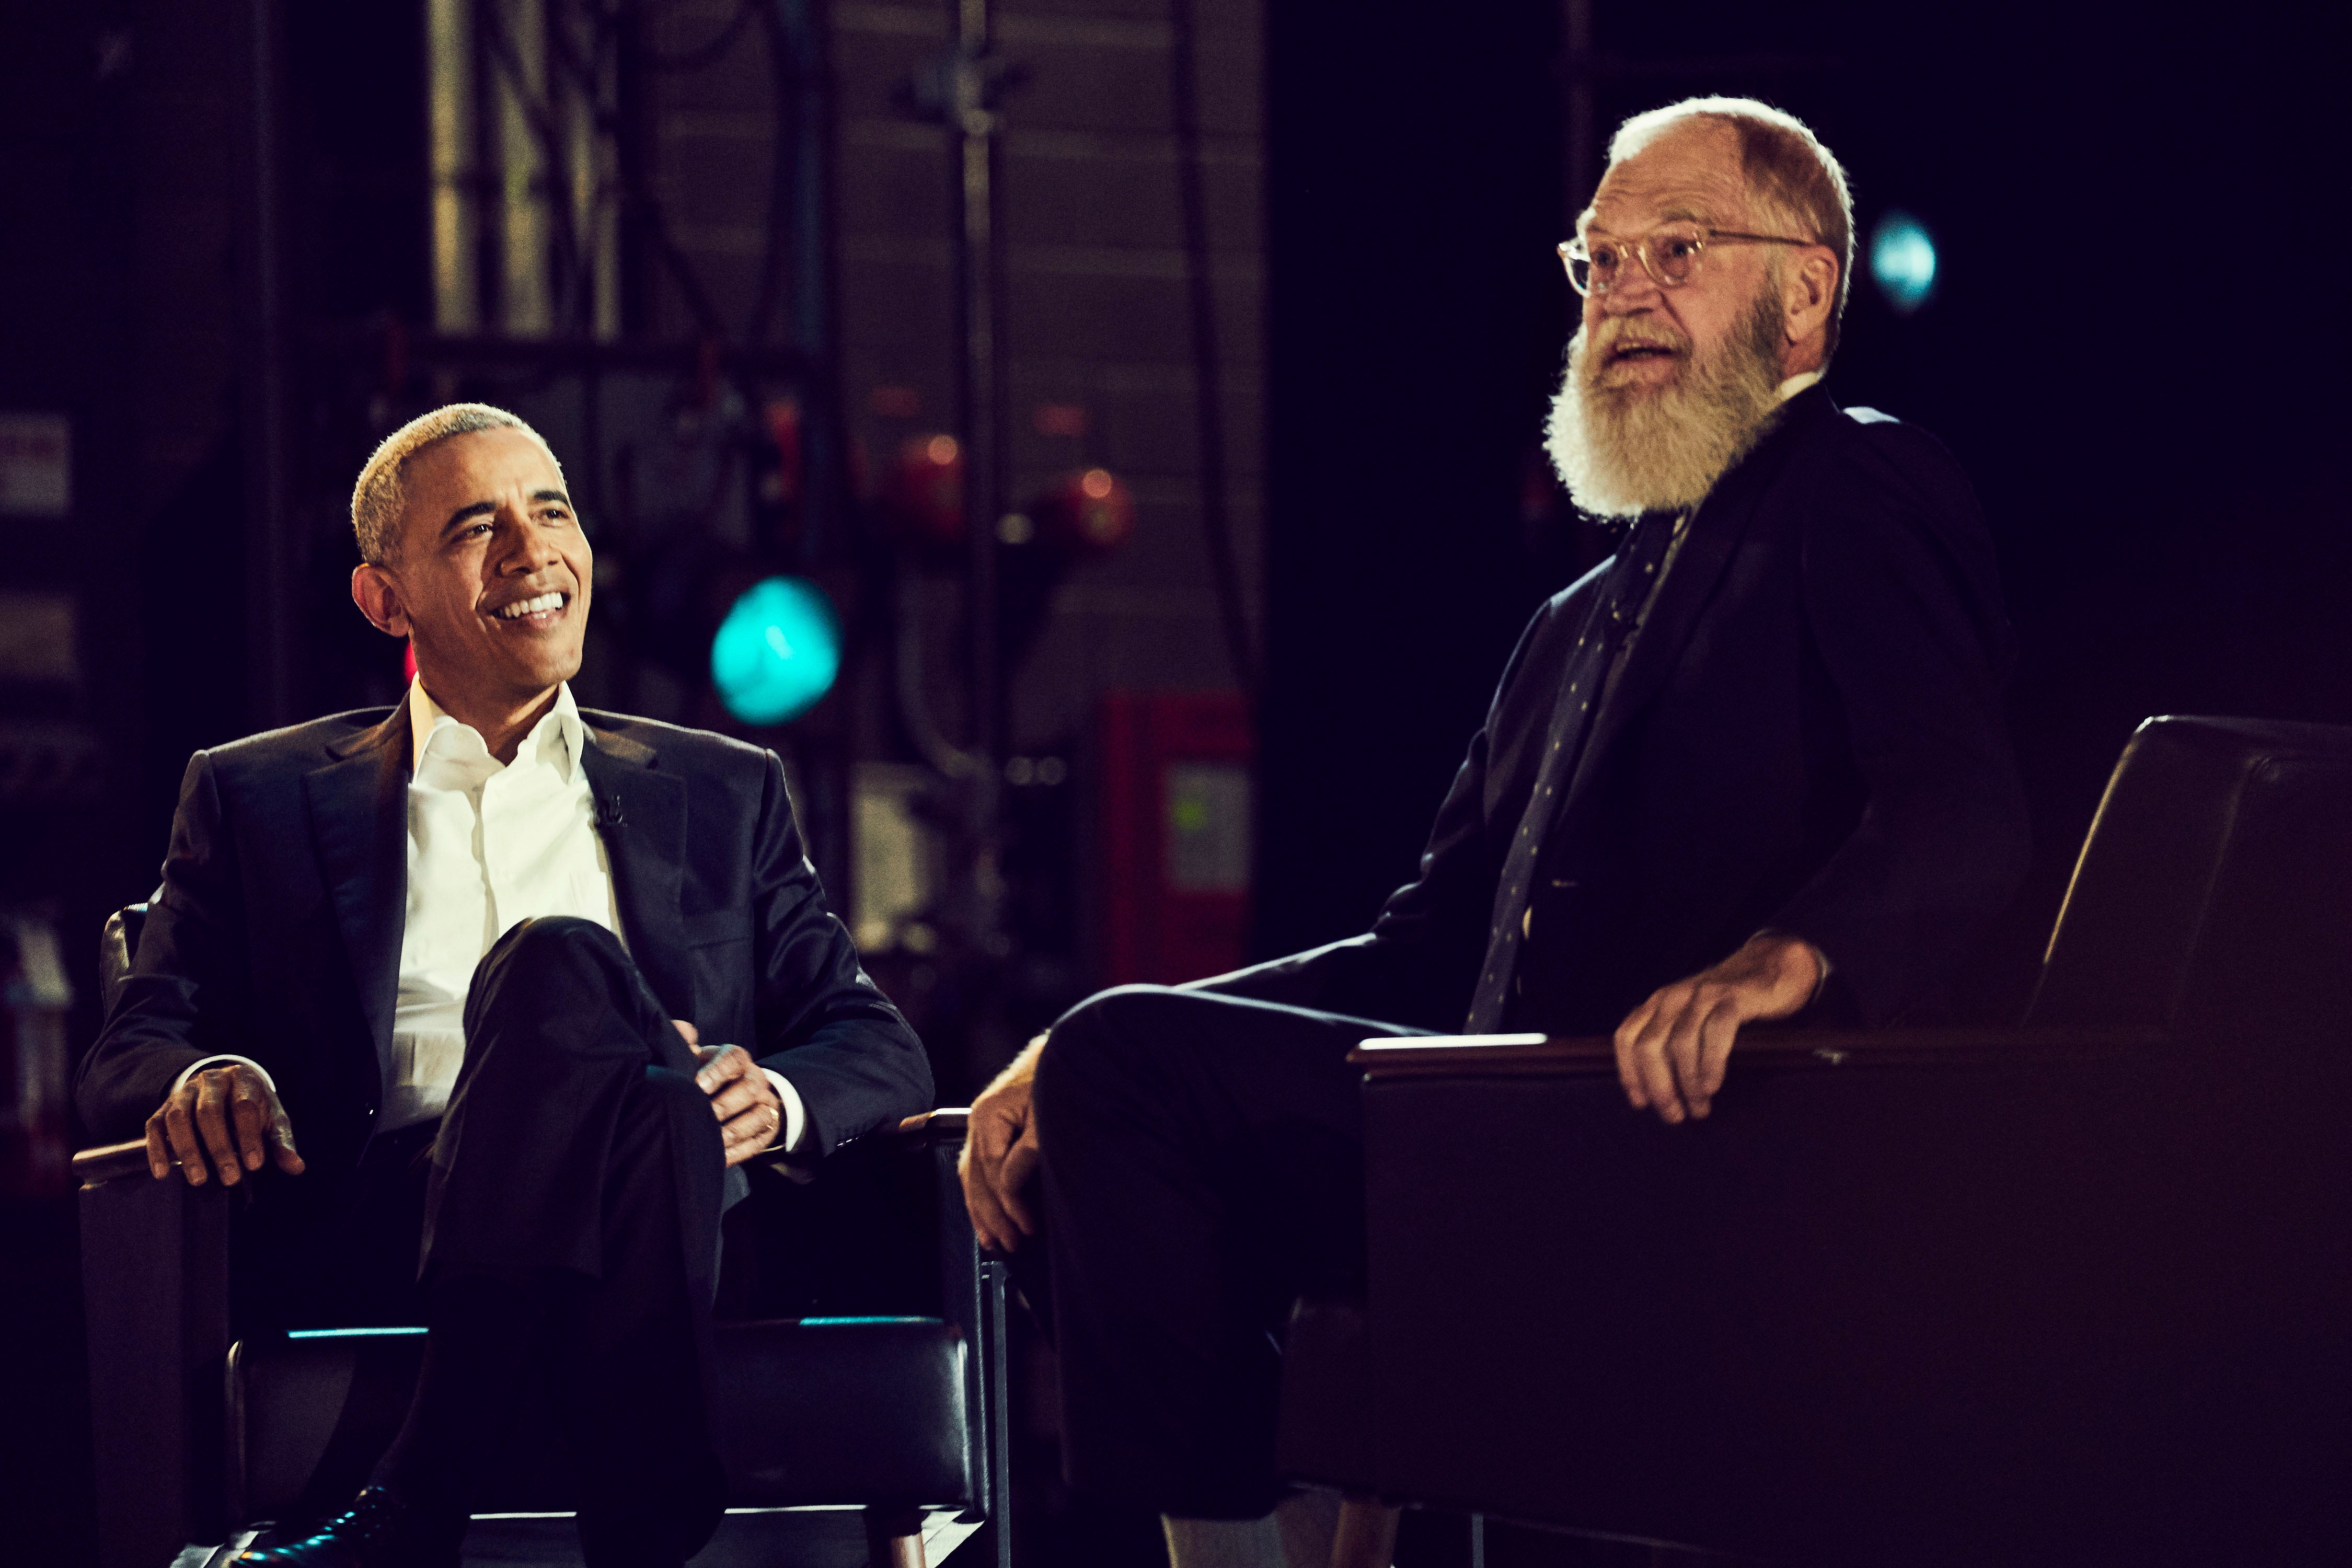 Barack Obama and David Letterman